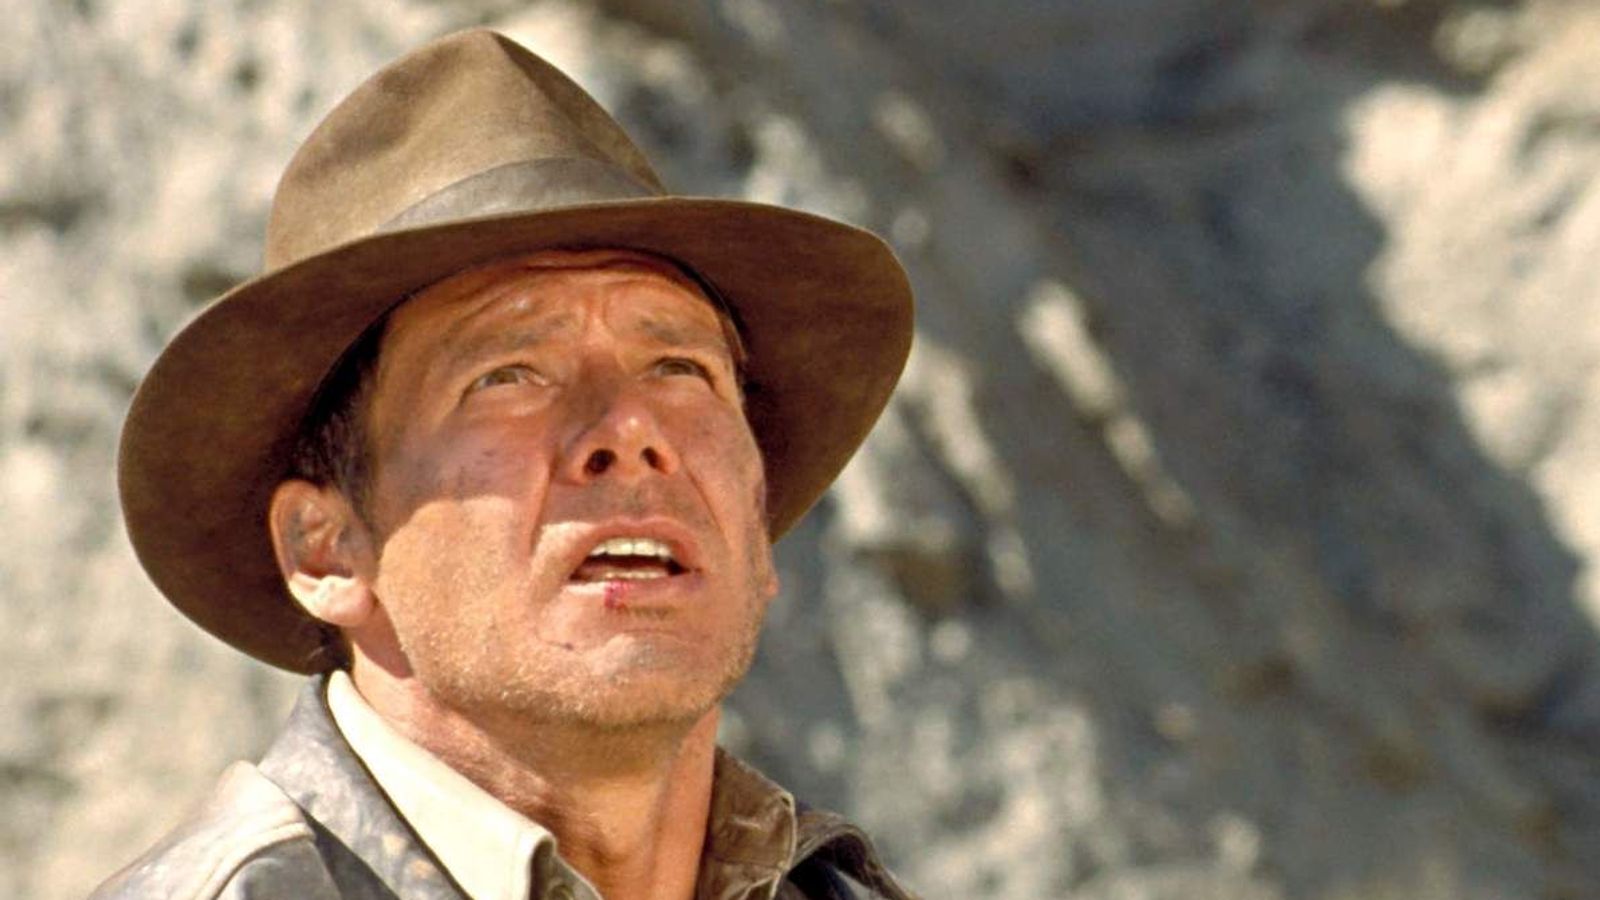 Harrison Ford, 78, injures shoulder filming fight scene for new Indiana Jones movie